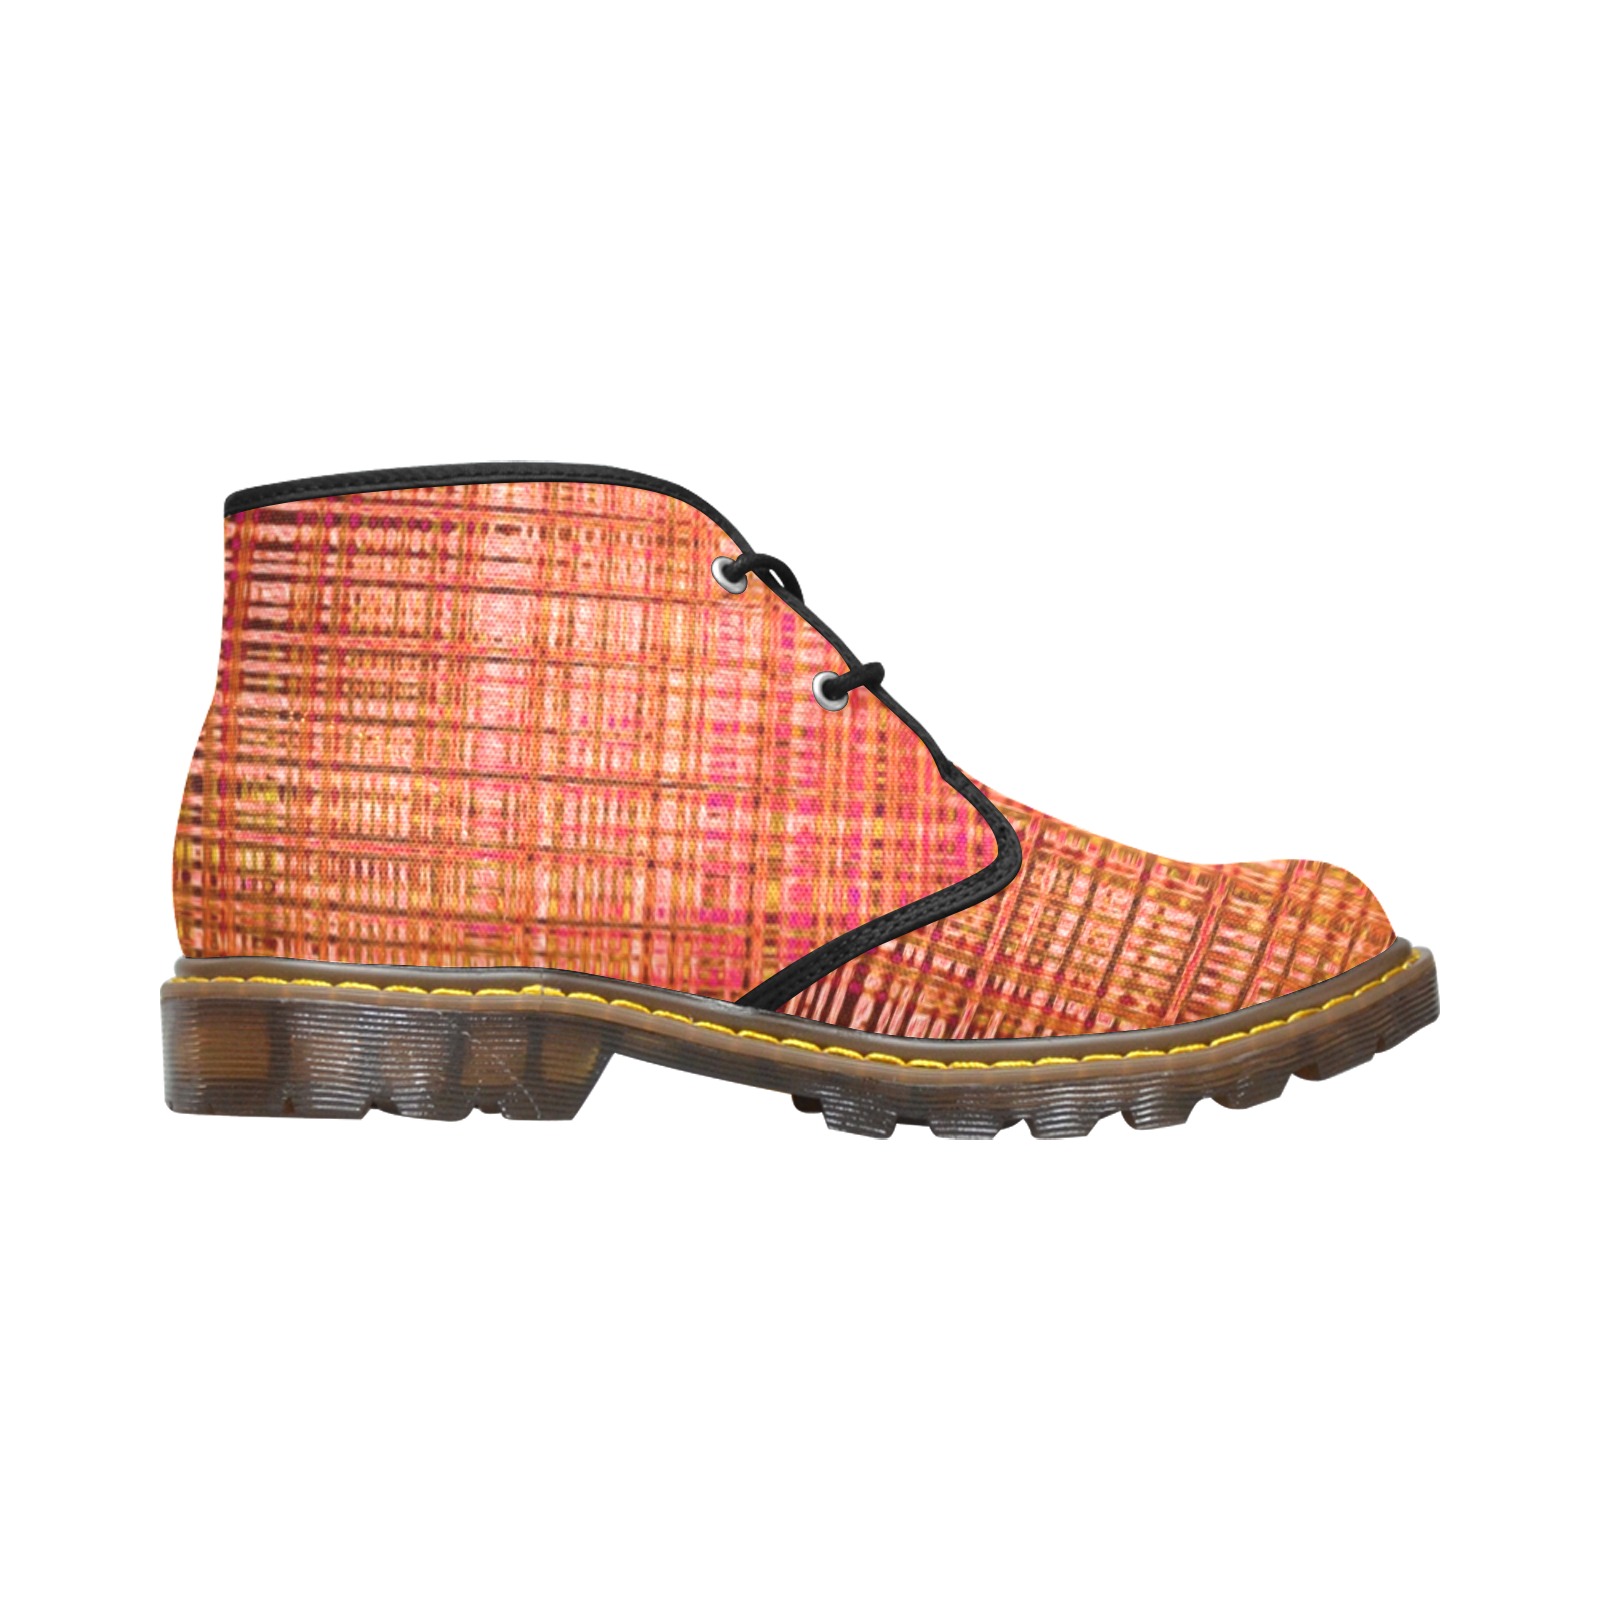 HEALING PLAID Women's Canvas Chukka Boots (Model 2402-1)